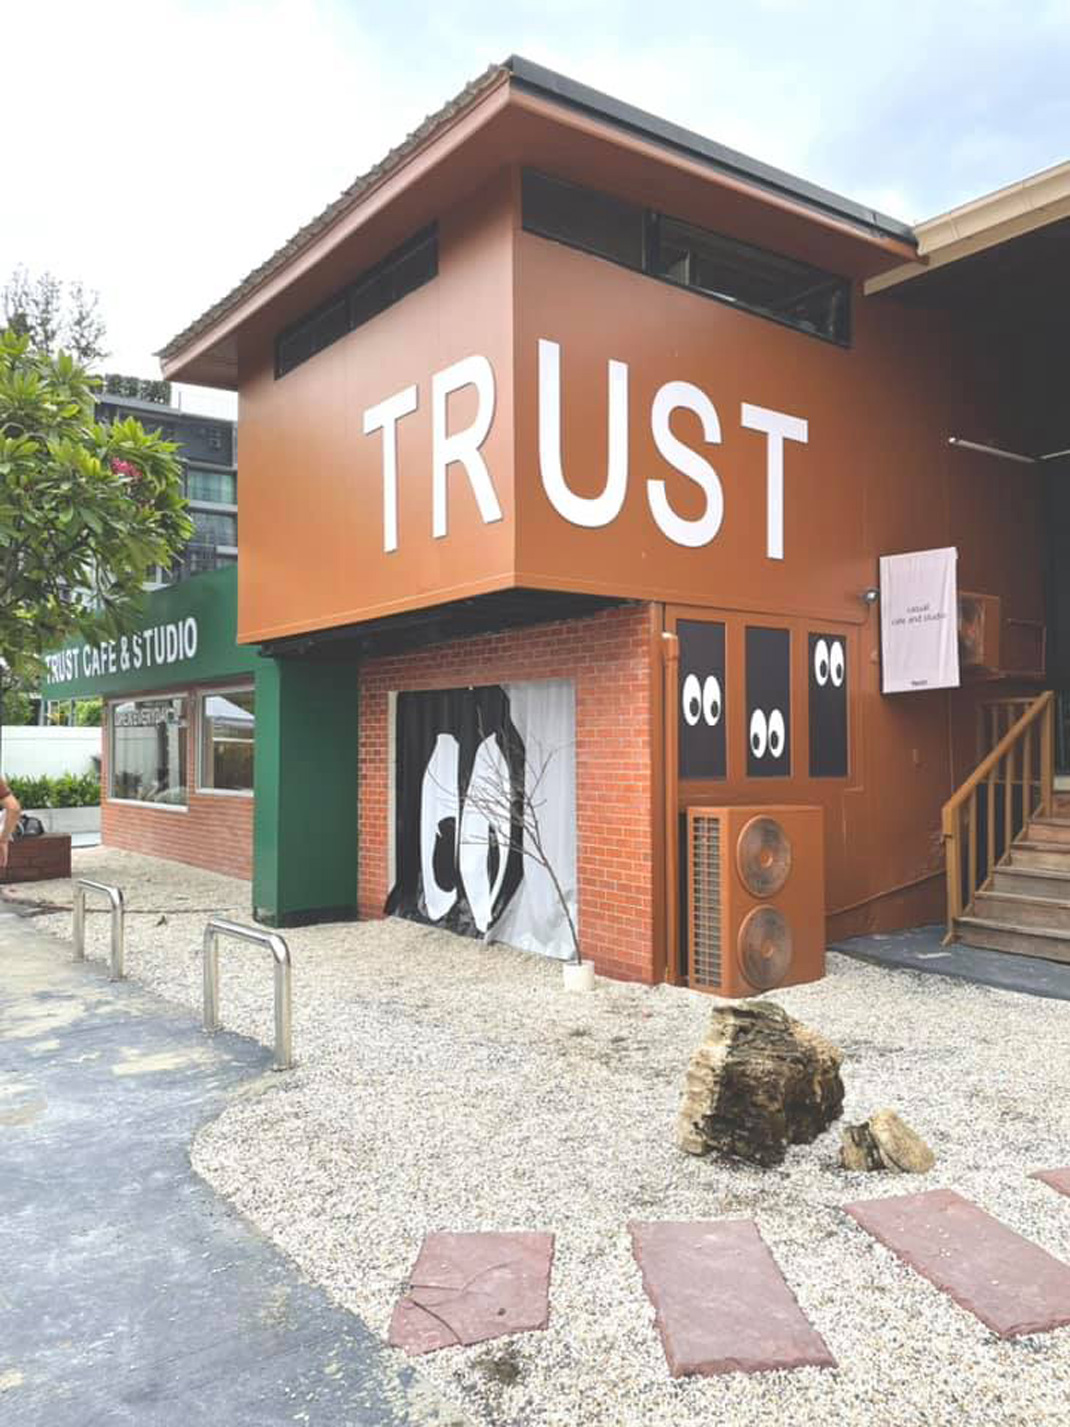 咖啡店Trust Cafe and Studio 泰国 咖啡店 插图 logo设计 vi设计 空间设计